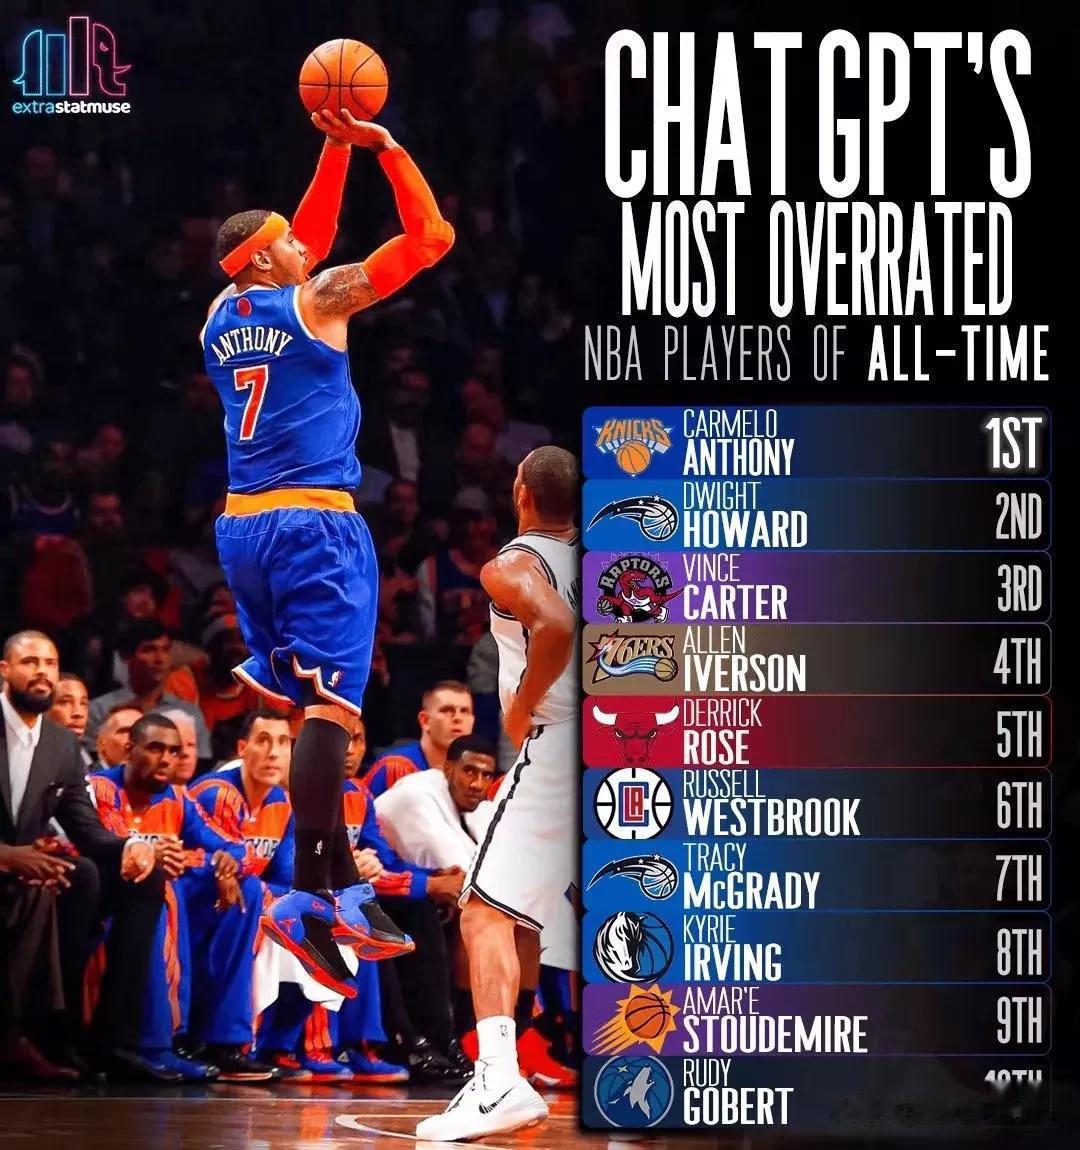 CHAT GPT评选NBA历史上十大被高估的球员，谁最让人感到意外？
1、安东尼(1)